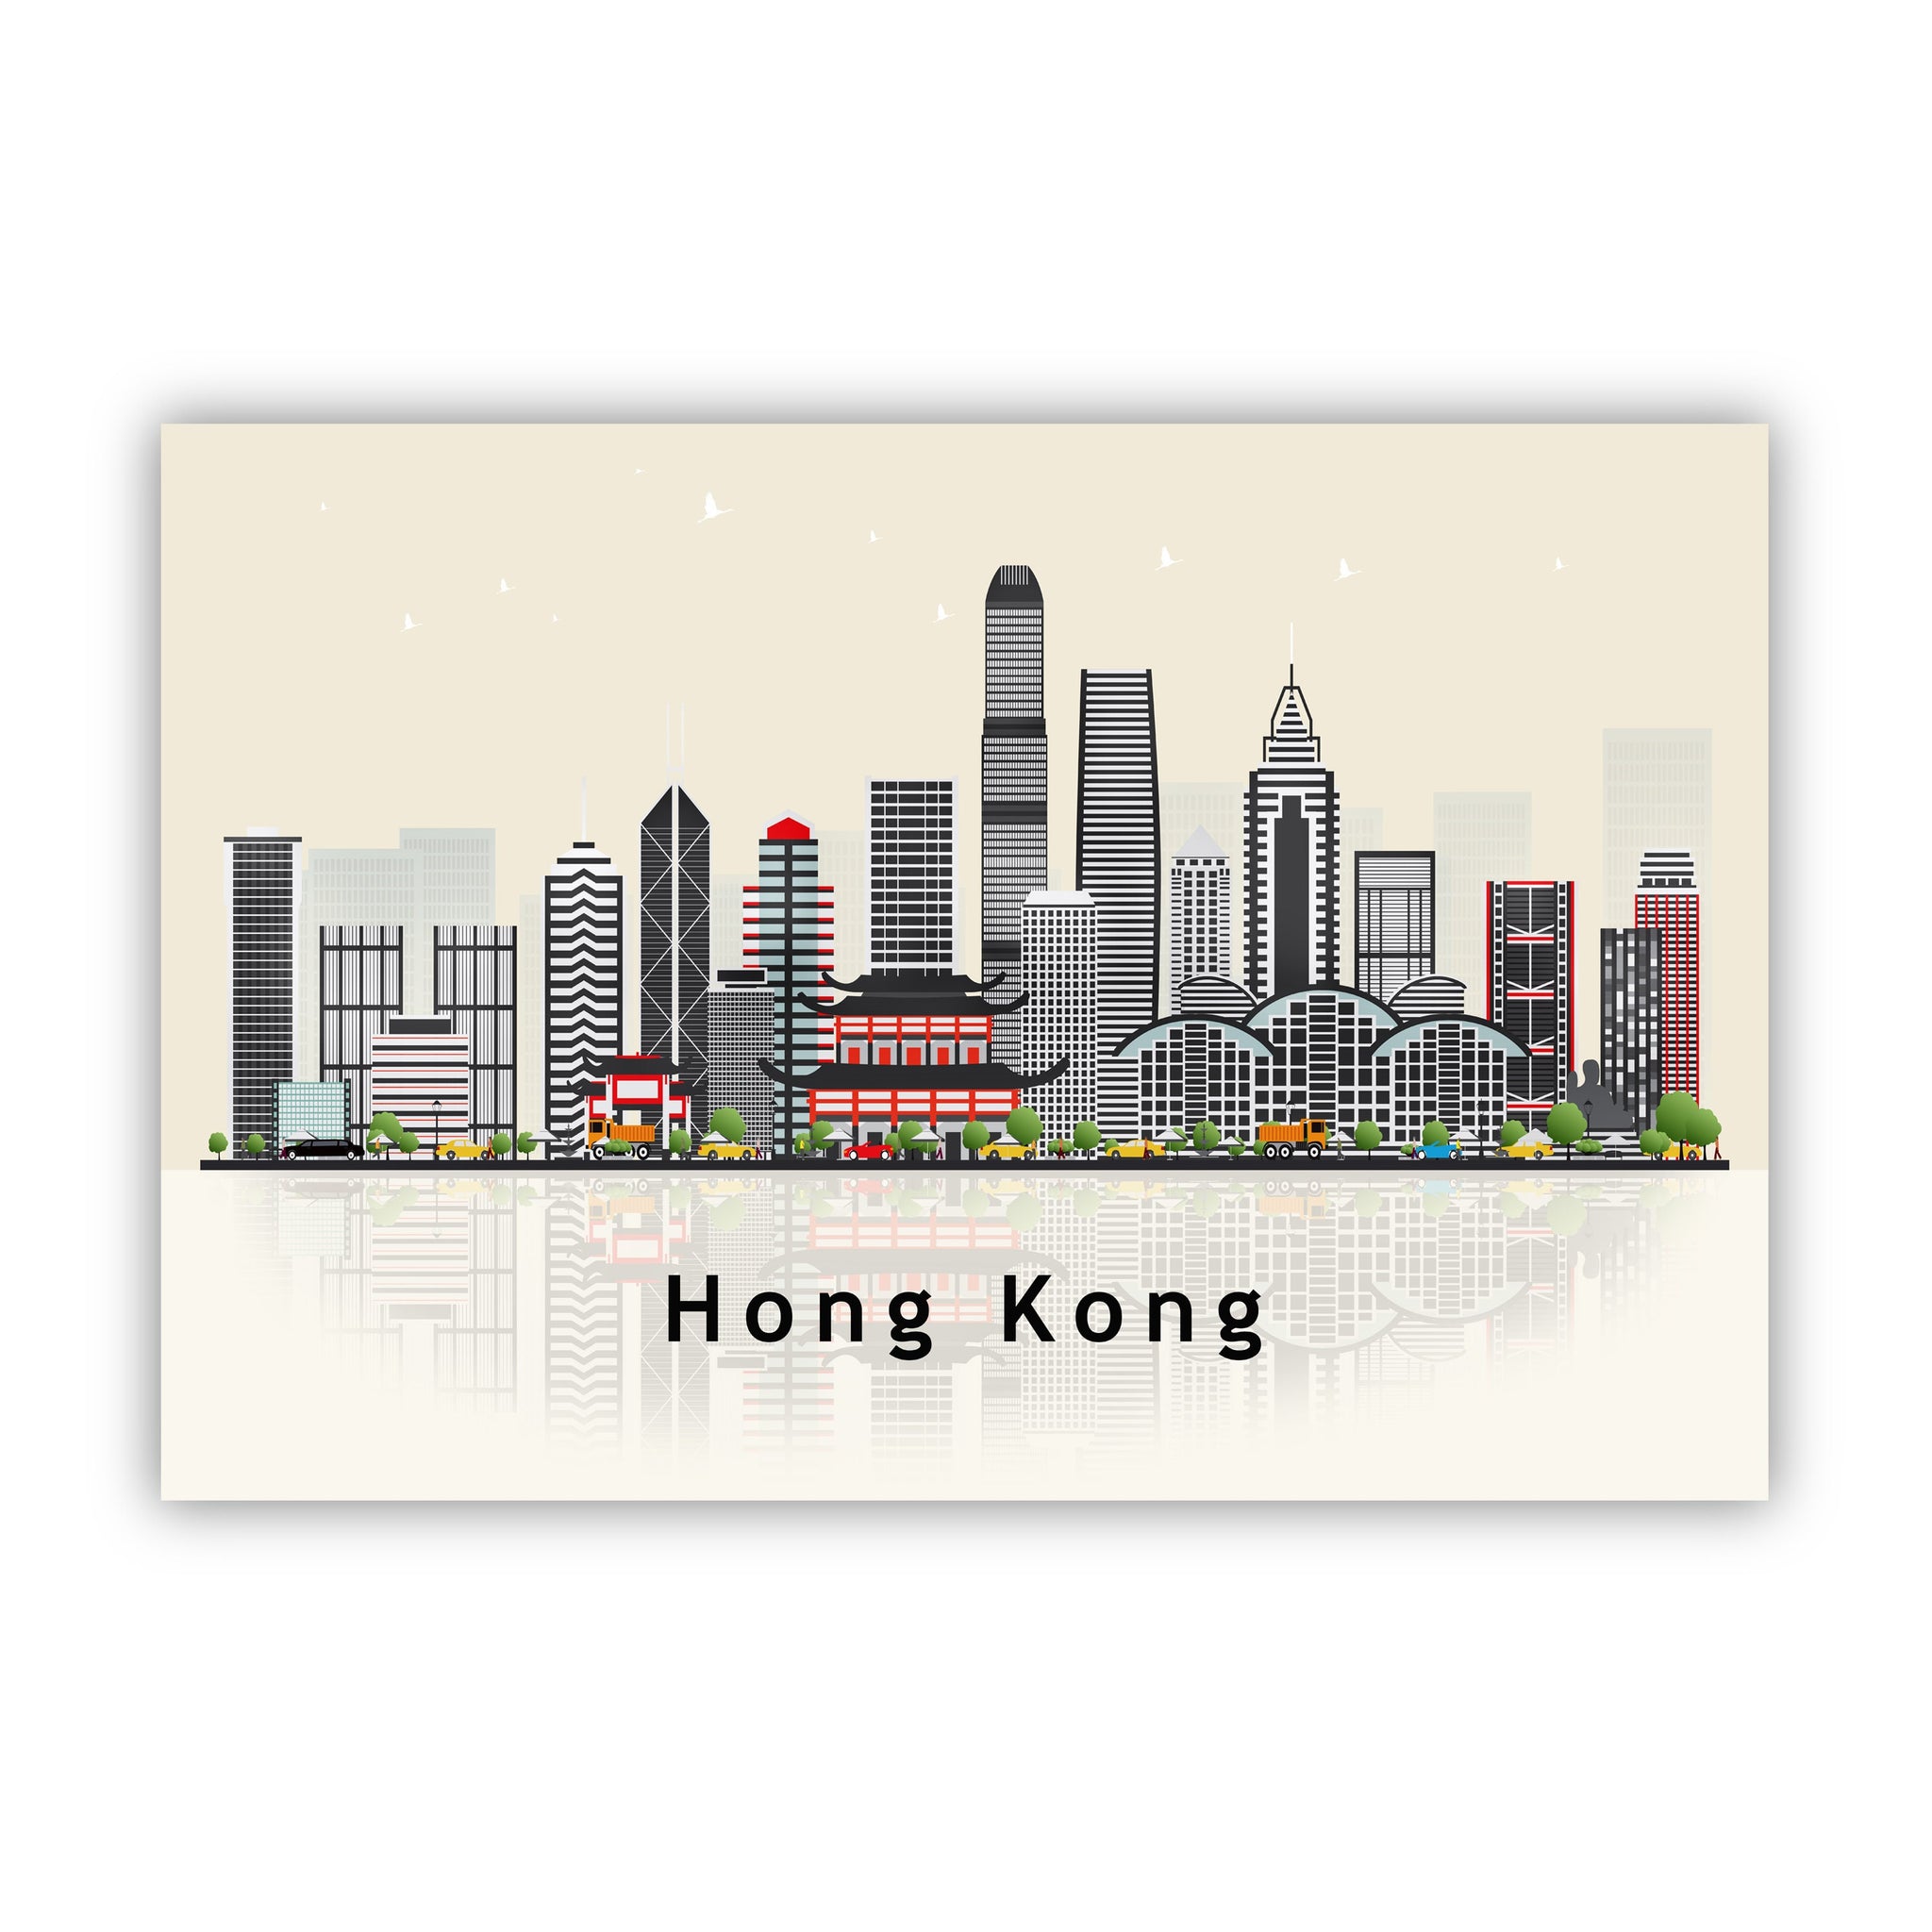 HONG KONG Illustration skyline poster, Modern skyline cityscape poster, Hong Kong skyline landmark map poster, Home wall decoration